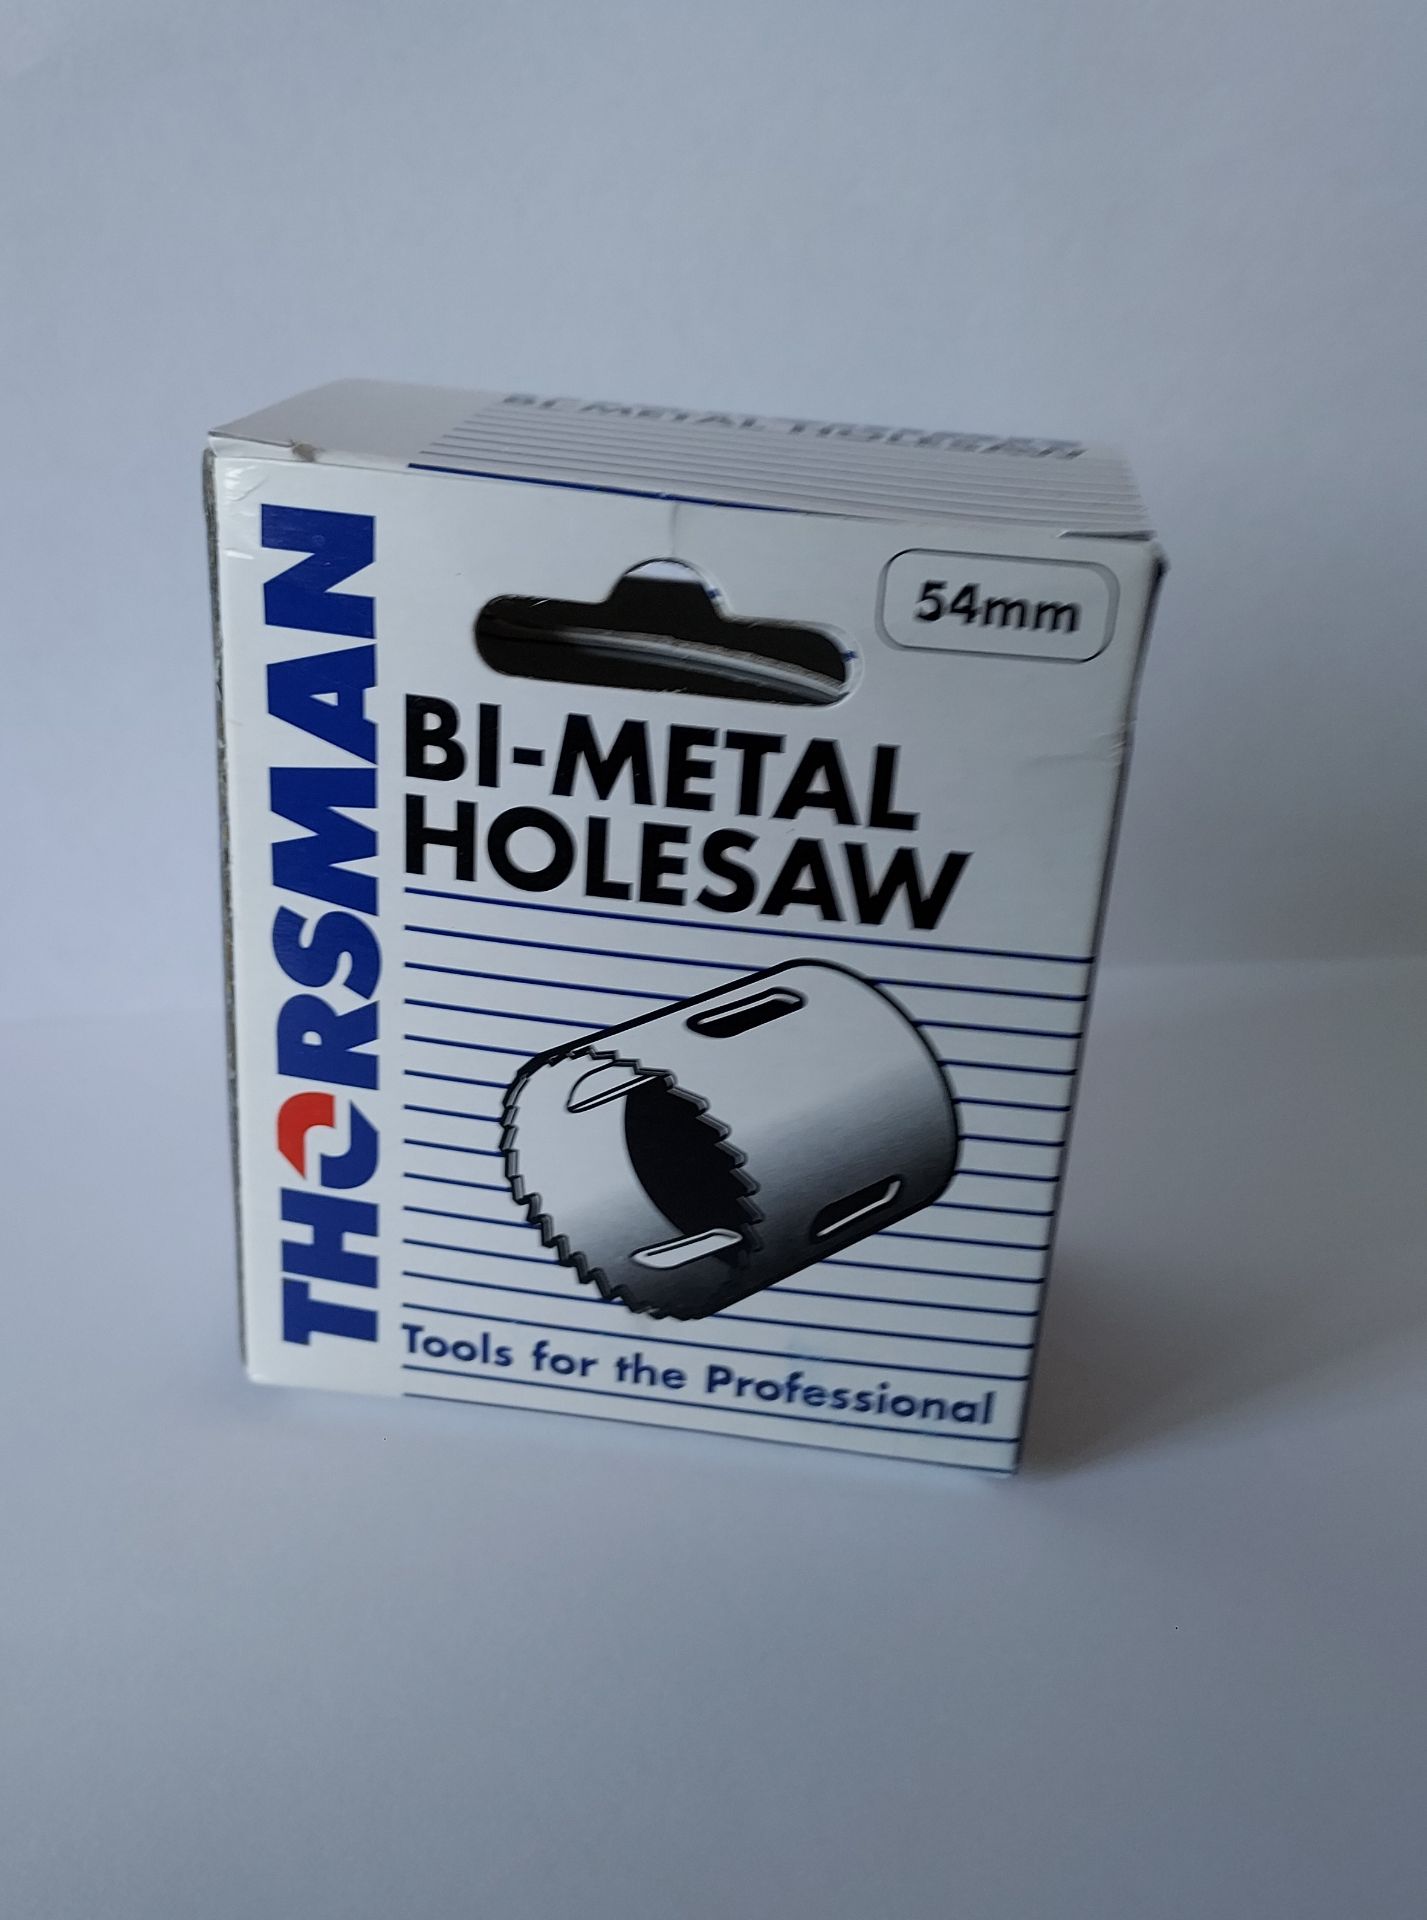 5 x Thorsman Bi - Metal Hole saw 54mm - Retail value £4.99 each